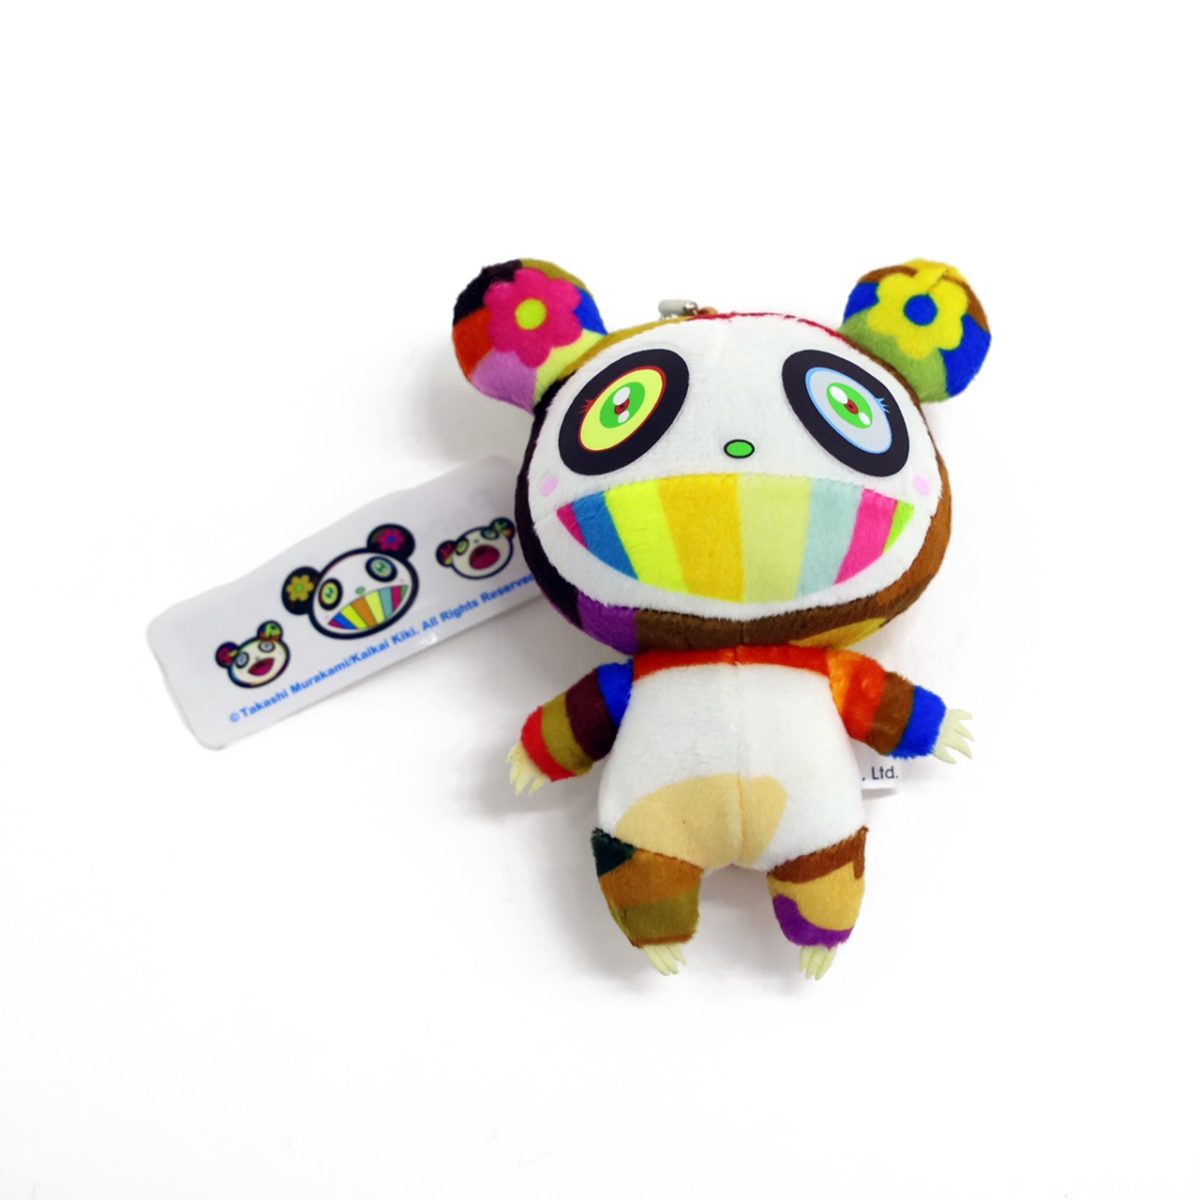 Mini Plush Panda & Kiki 2点セット